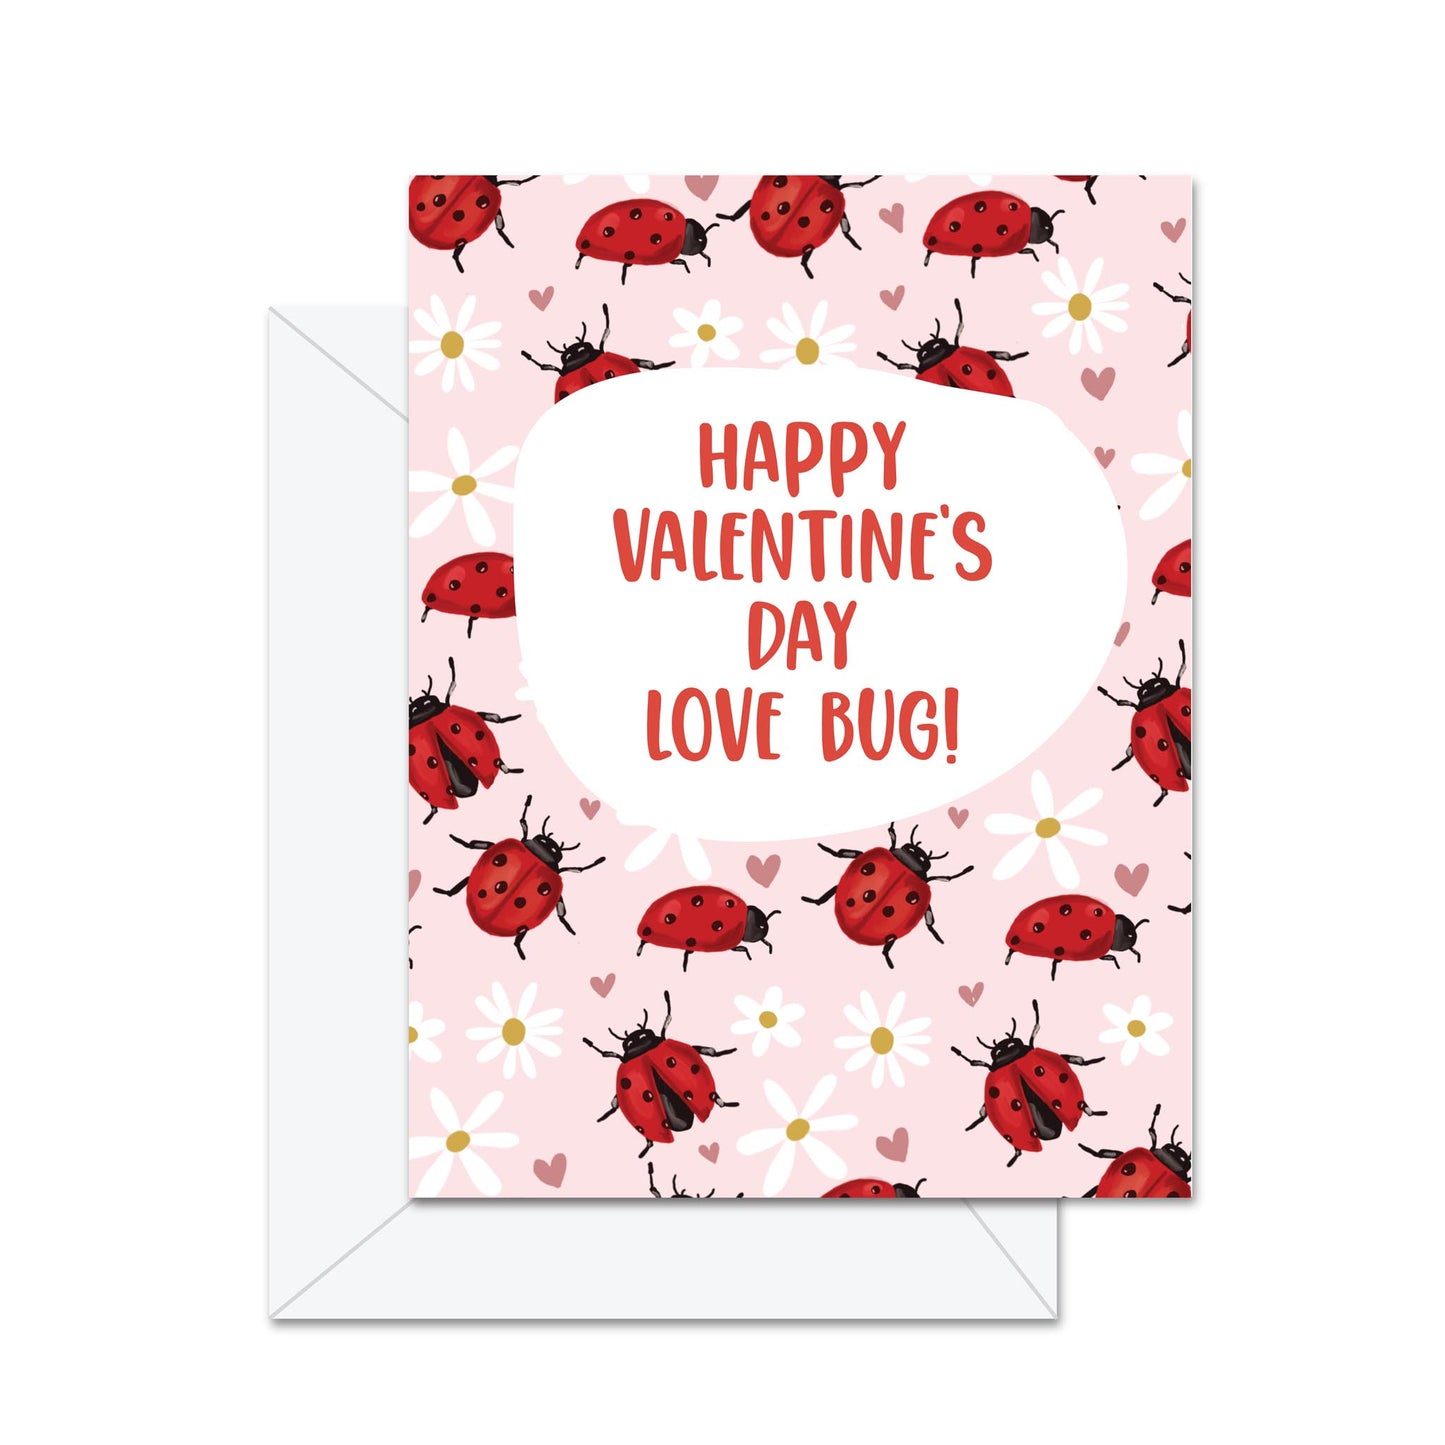 Happy Valentine's Day Love Bug - Greeting Card